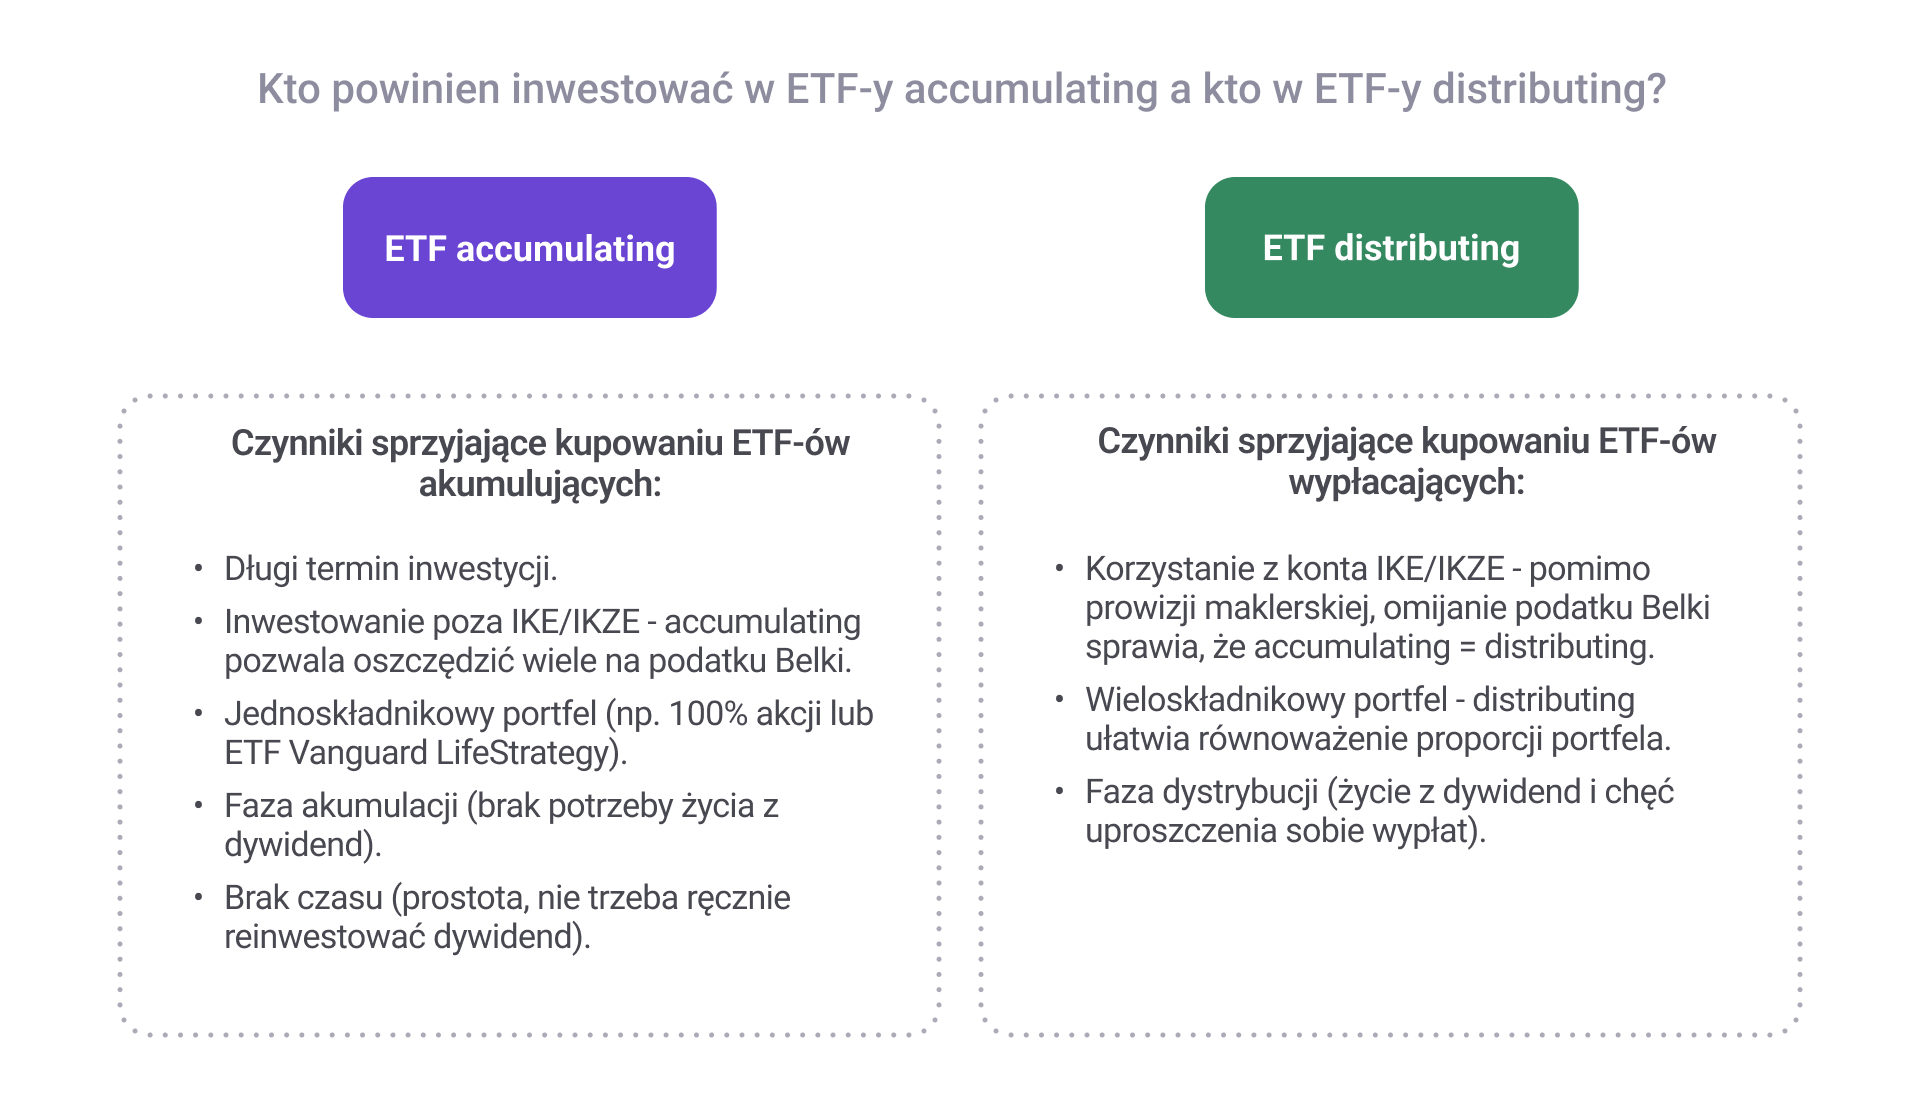 ETF accumulating czy distributing - wnioski